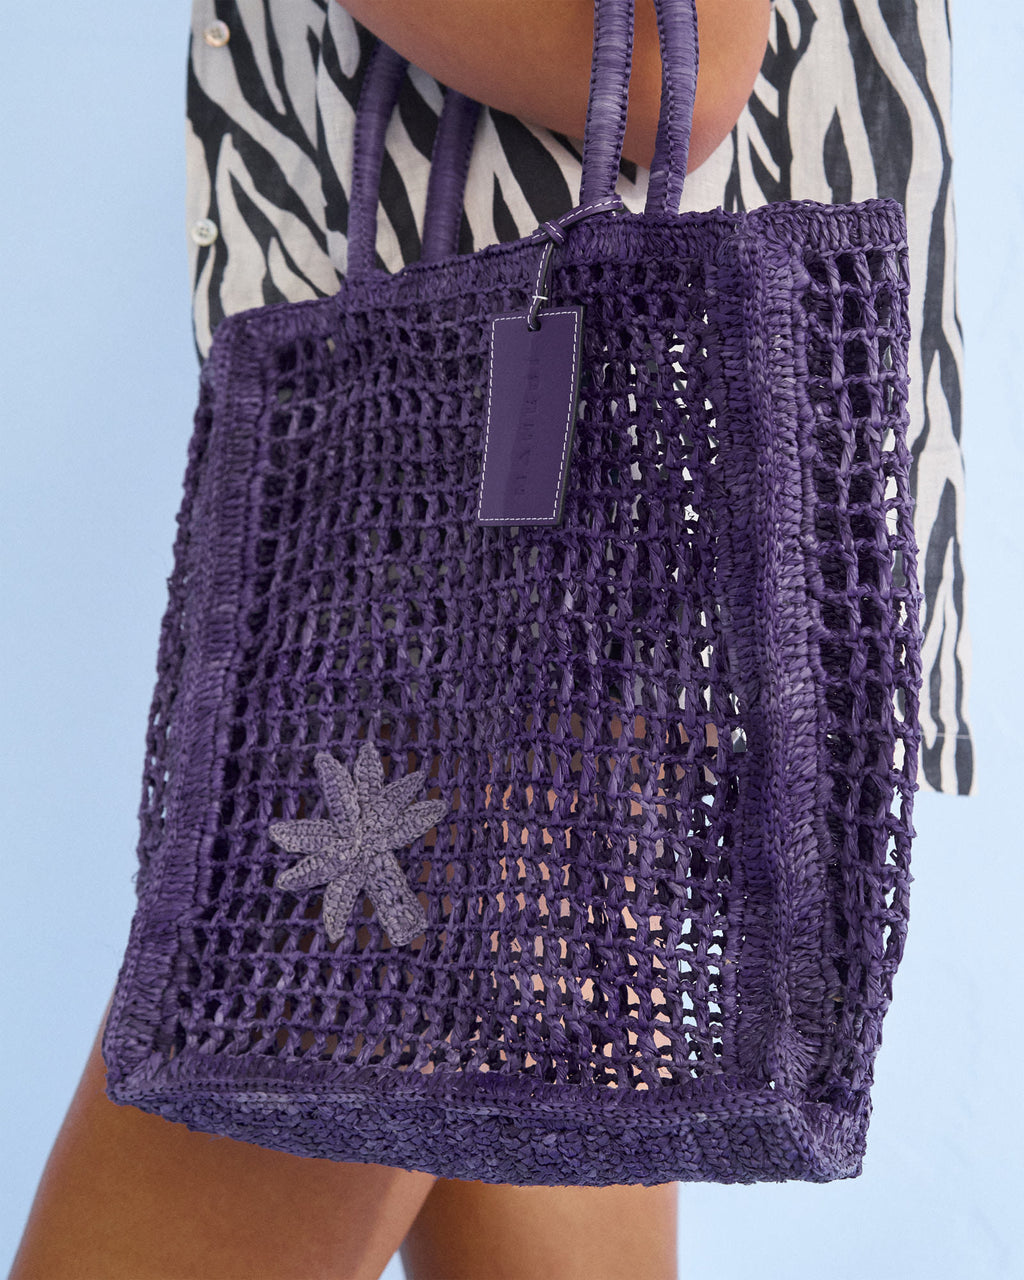 Raffia Net Bag - Summer Purple with Palm